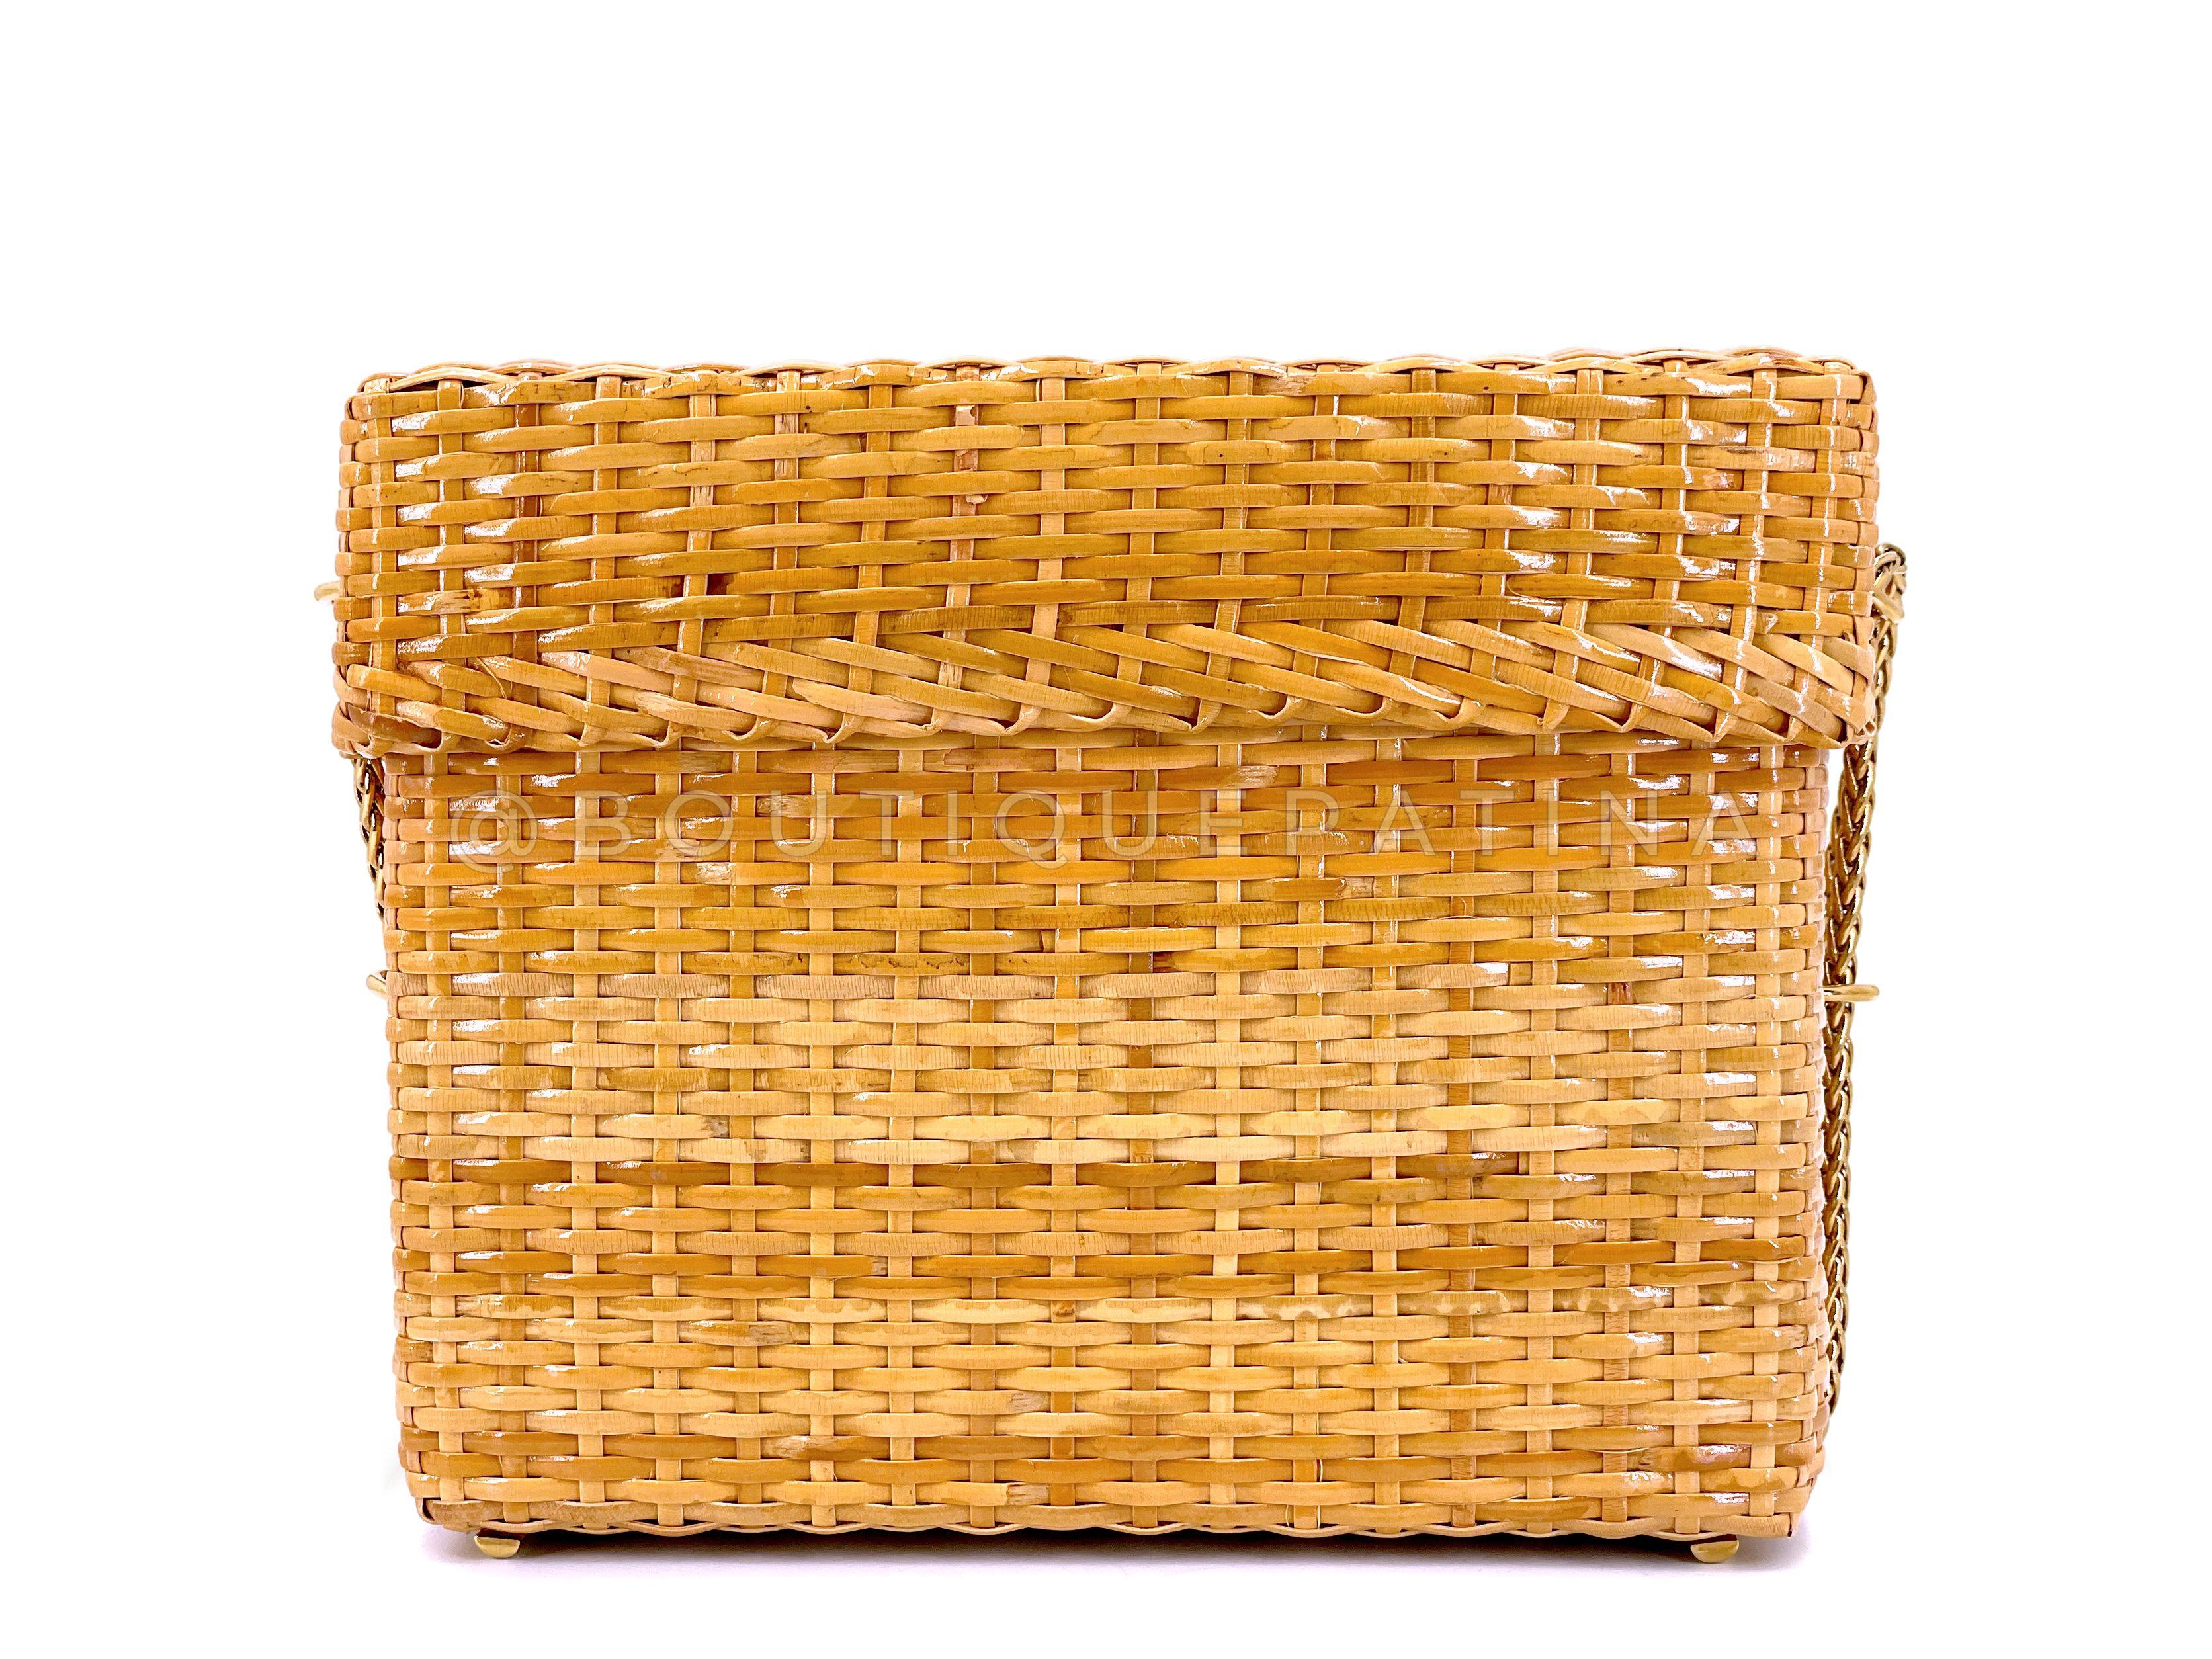 Chanel Vintage Wicker Mini Picnic Basket Rattan Bag w Chain 67399 In Excellent Condition For Sale In Costa Mesa, CA